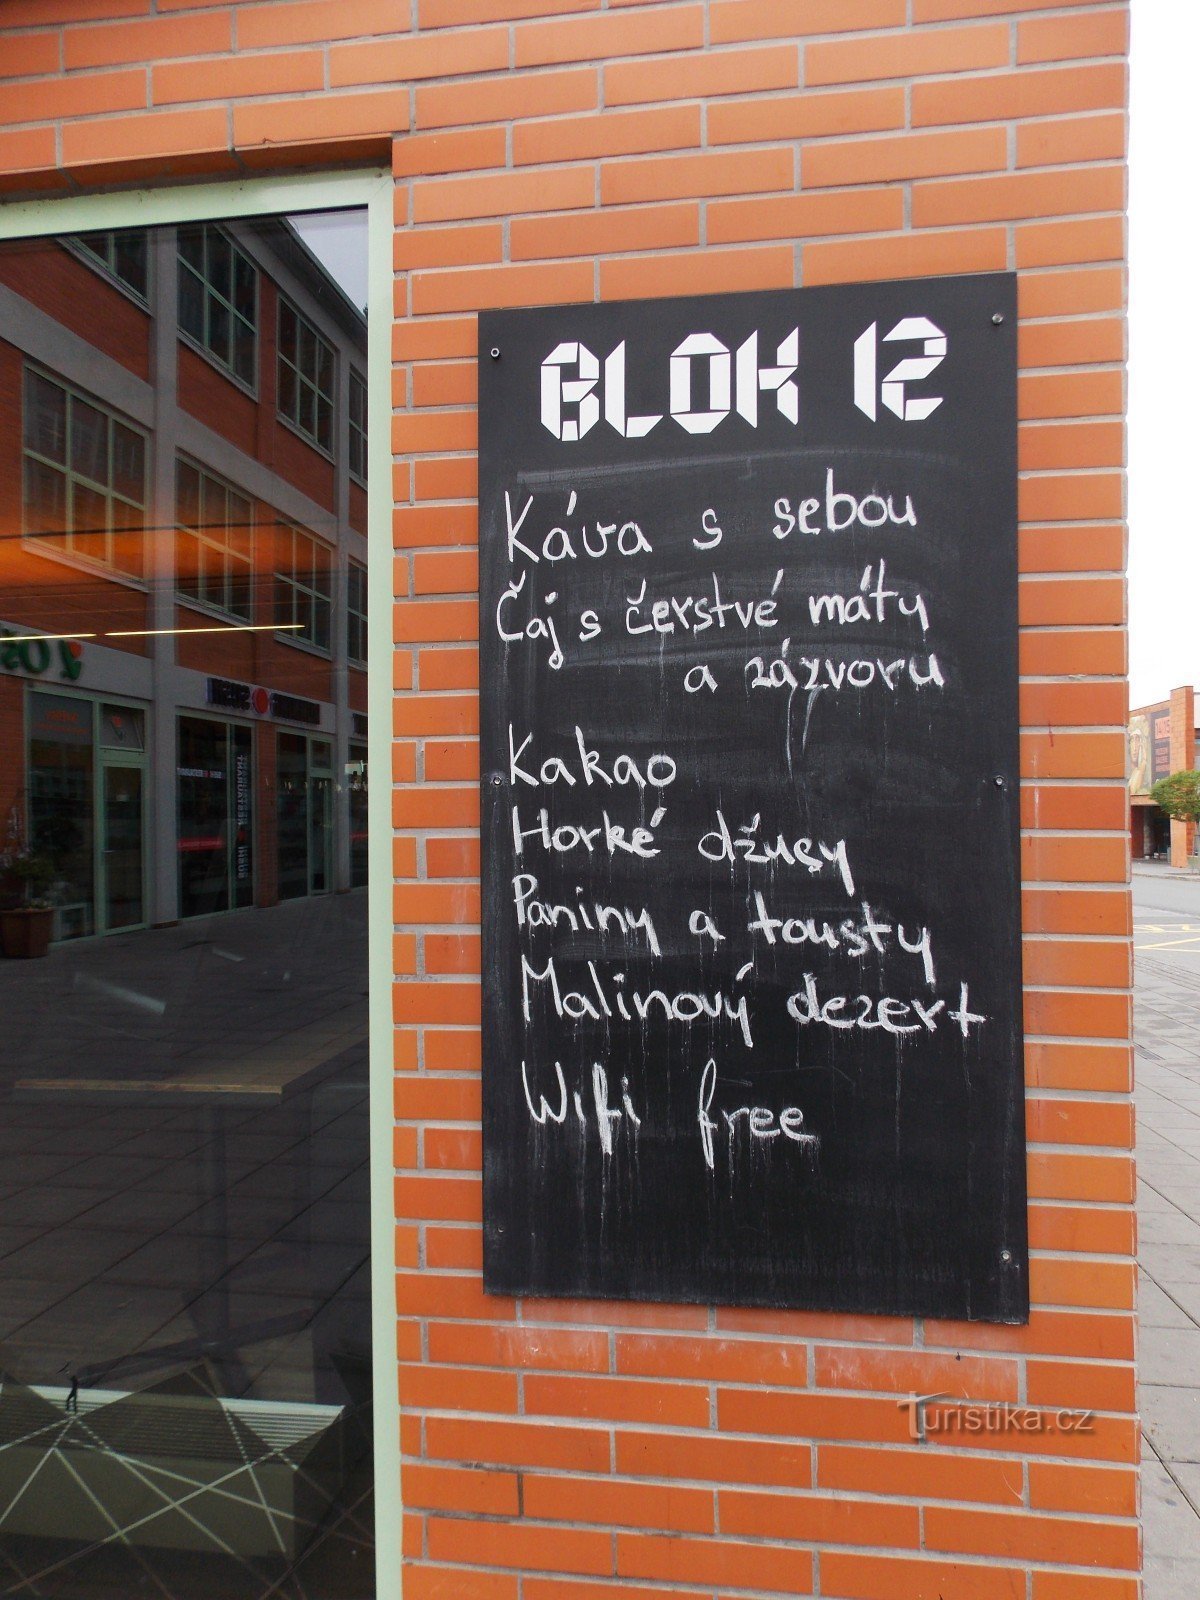 Pare no Blok 12 Café no centro de Zlín